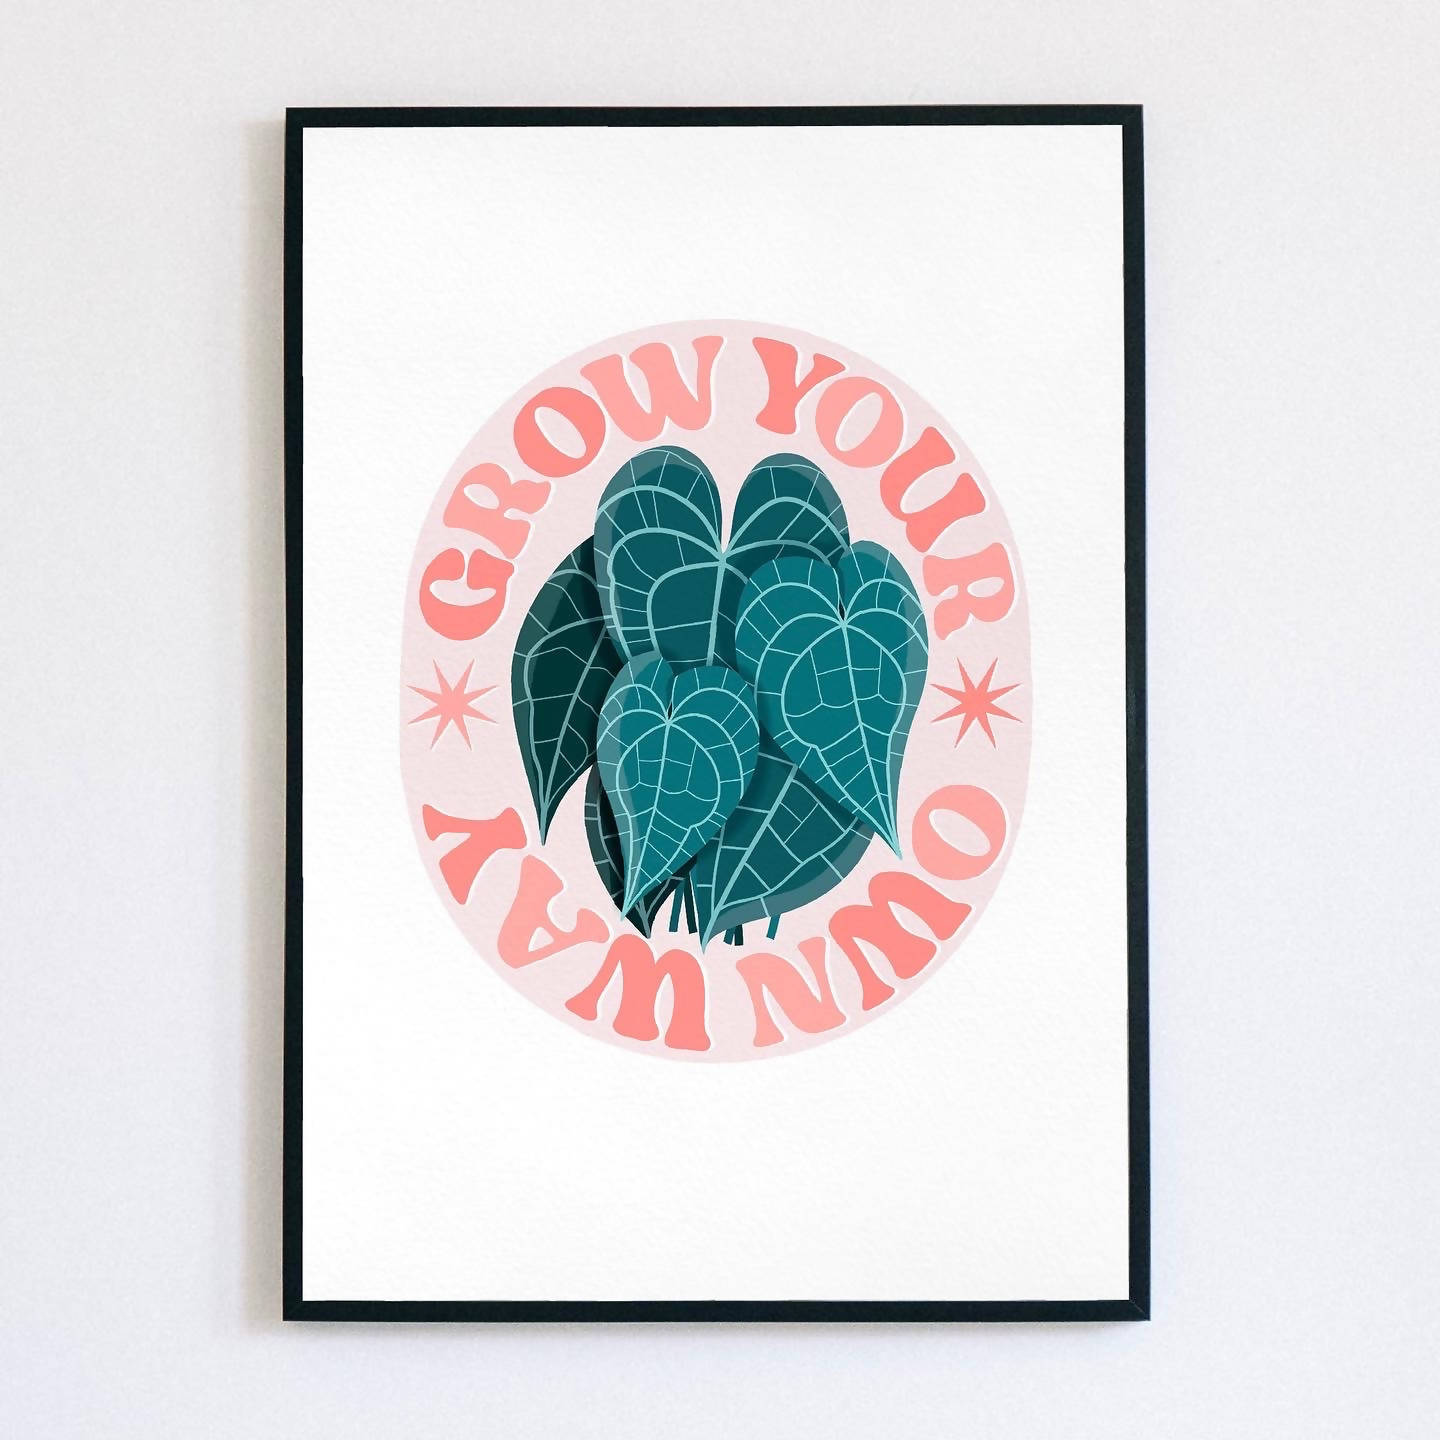 Grow Your Own Way - Art Print